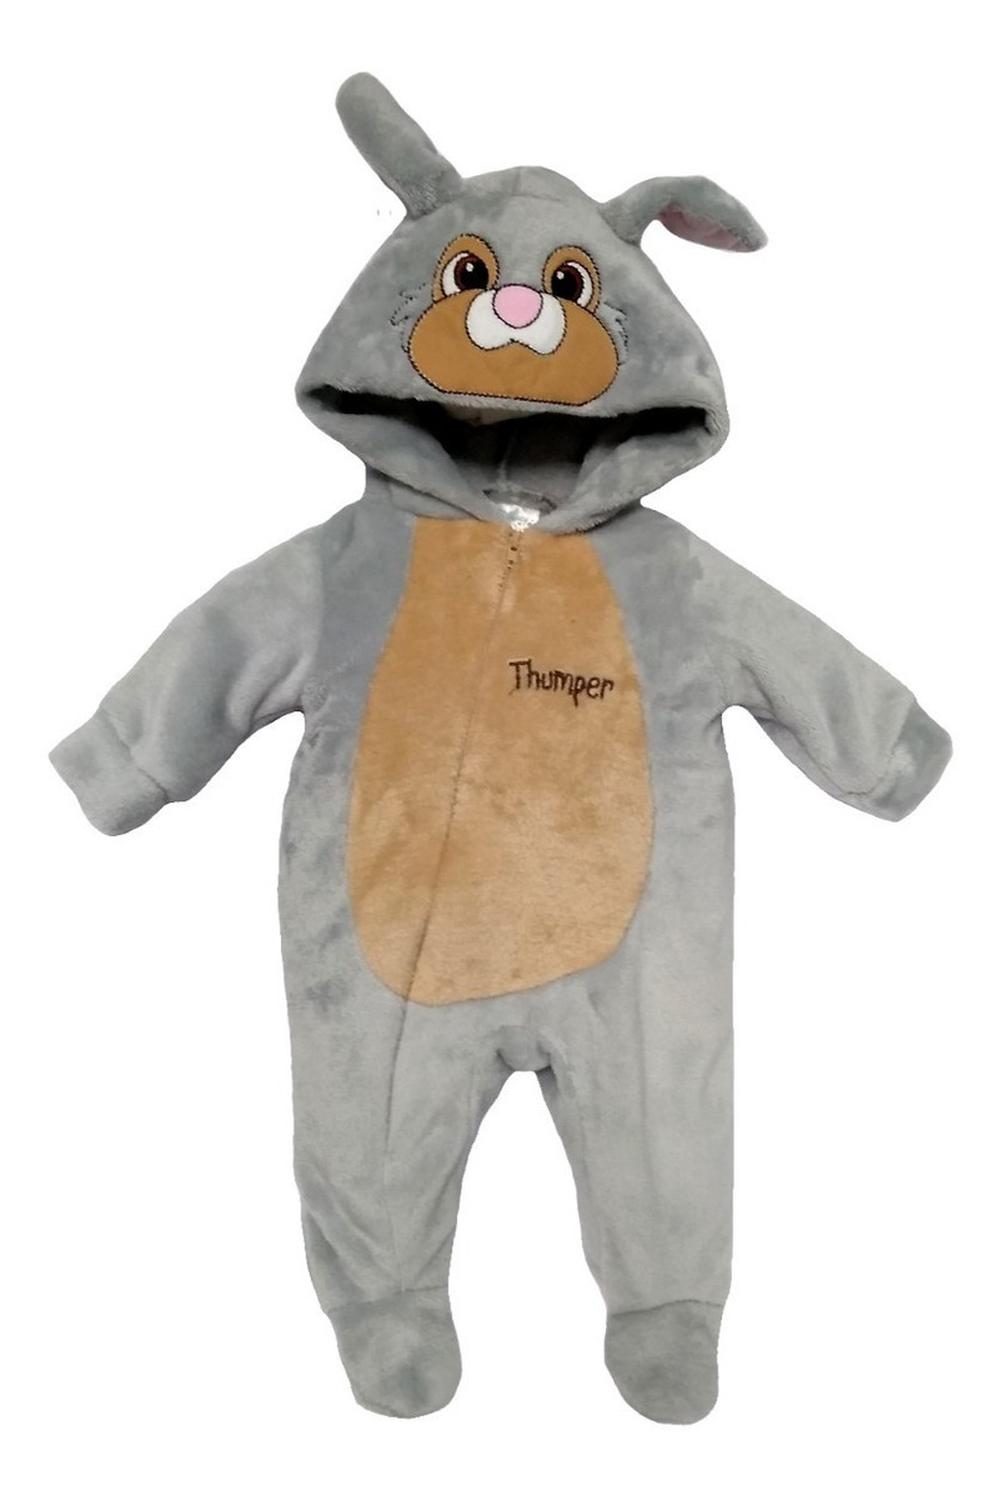 Kit 3 Mamelucos Disney para Bebé con Gorro Bordado Thumper, Winnie Pooh, Sulley